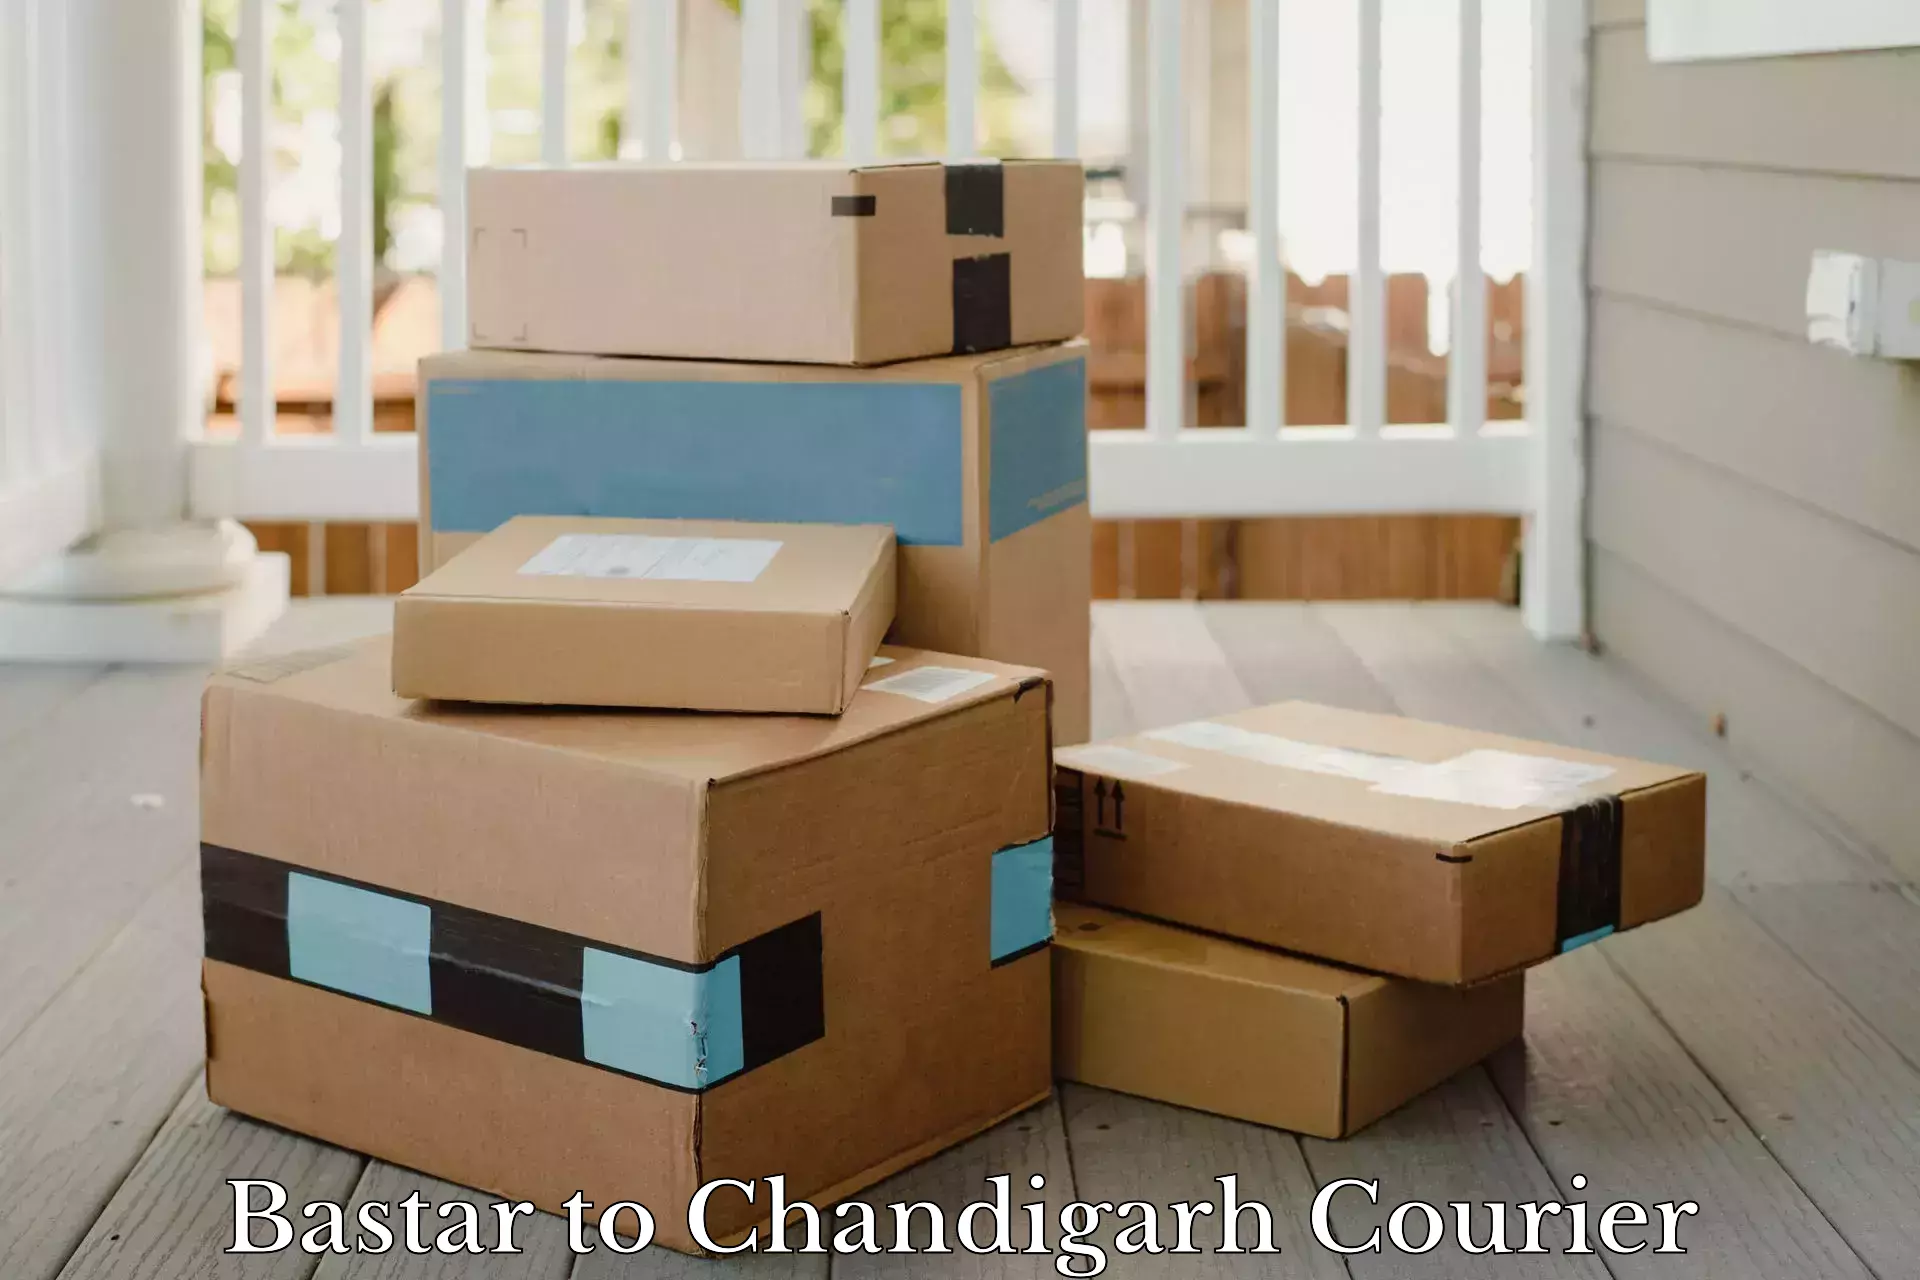 High-performance logistics Bastar to Chandigarh